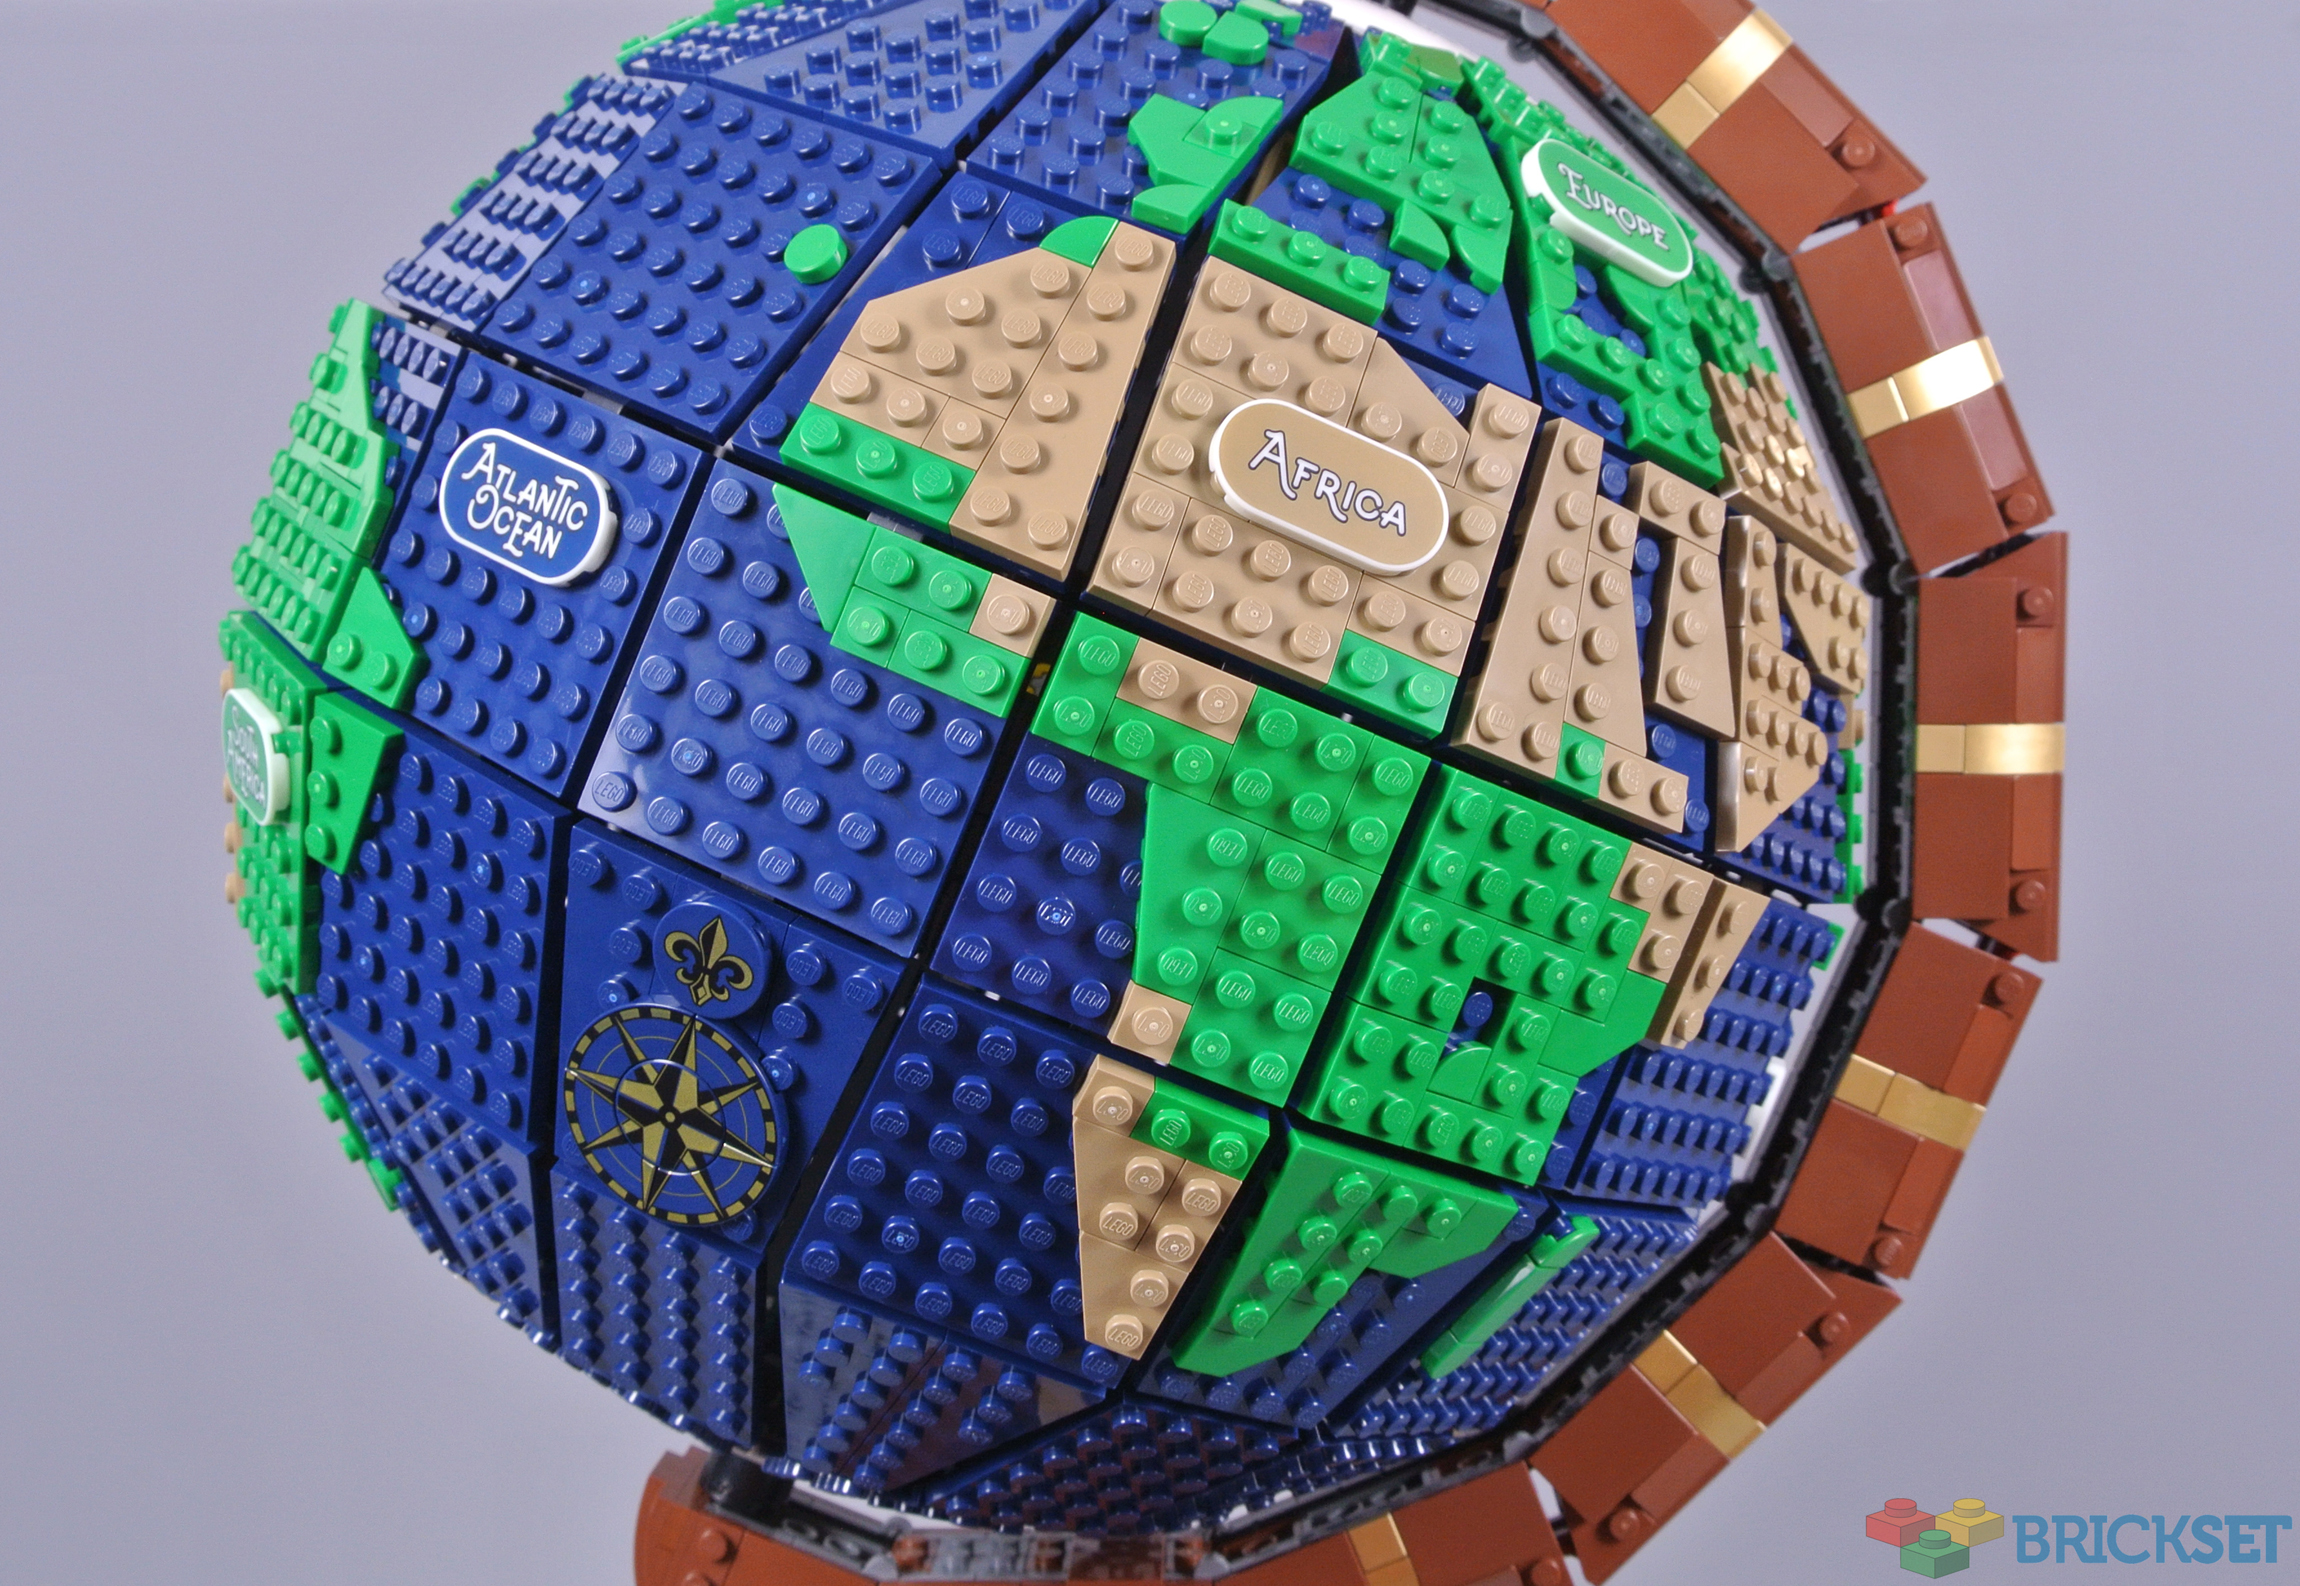 LEGO GLOBE is Amazing, BUT 